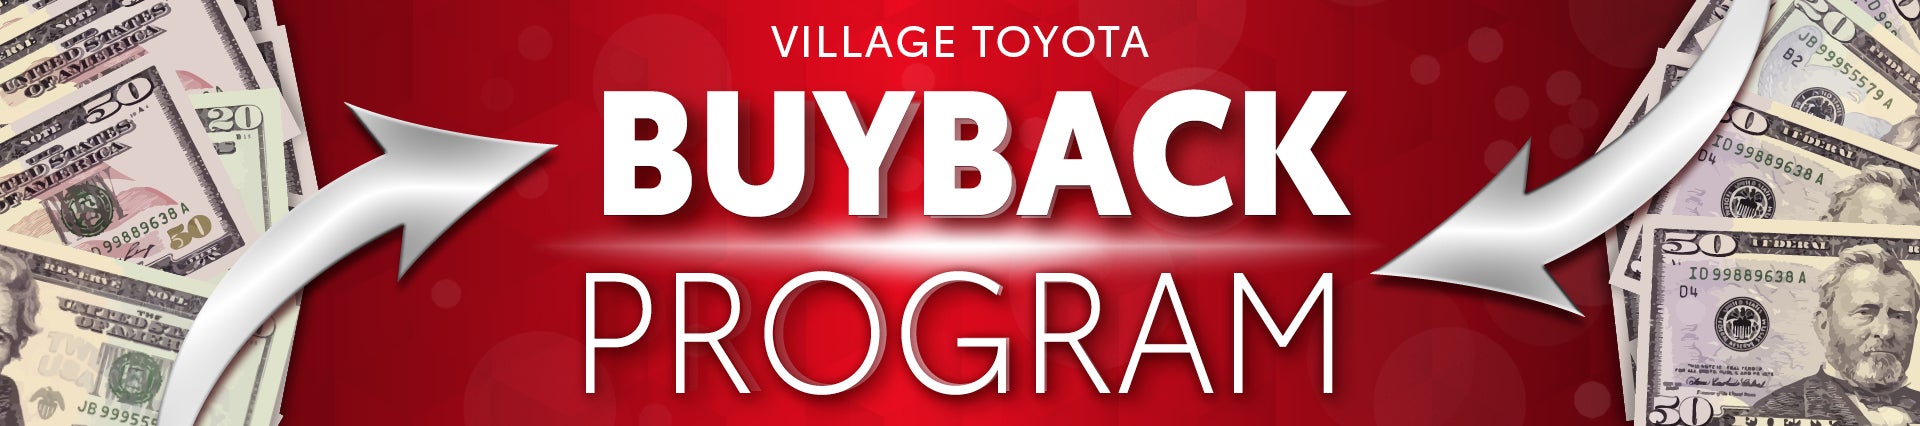 Buyback Program near Ocala FL